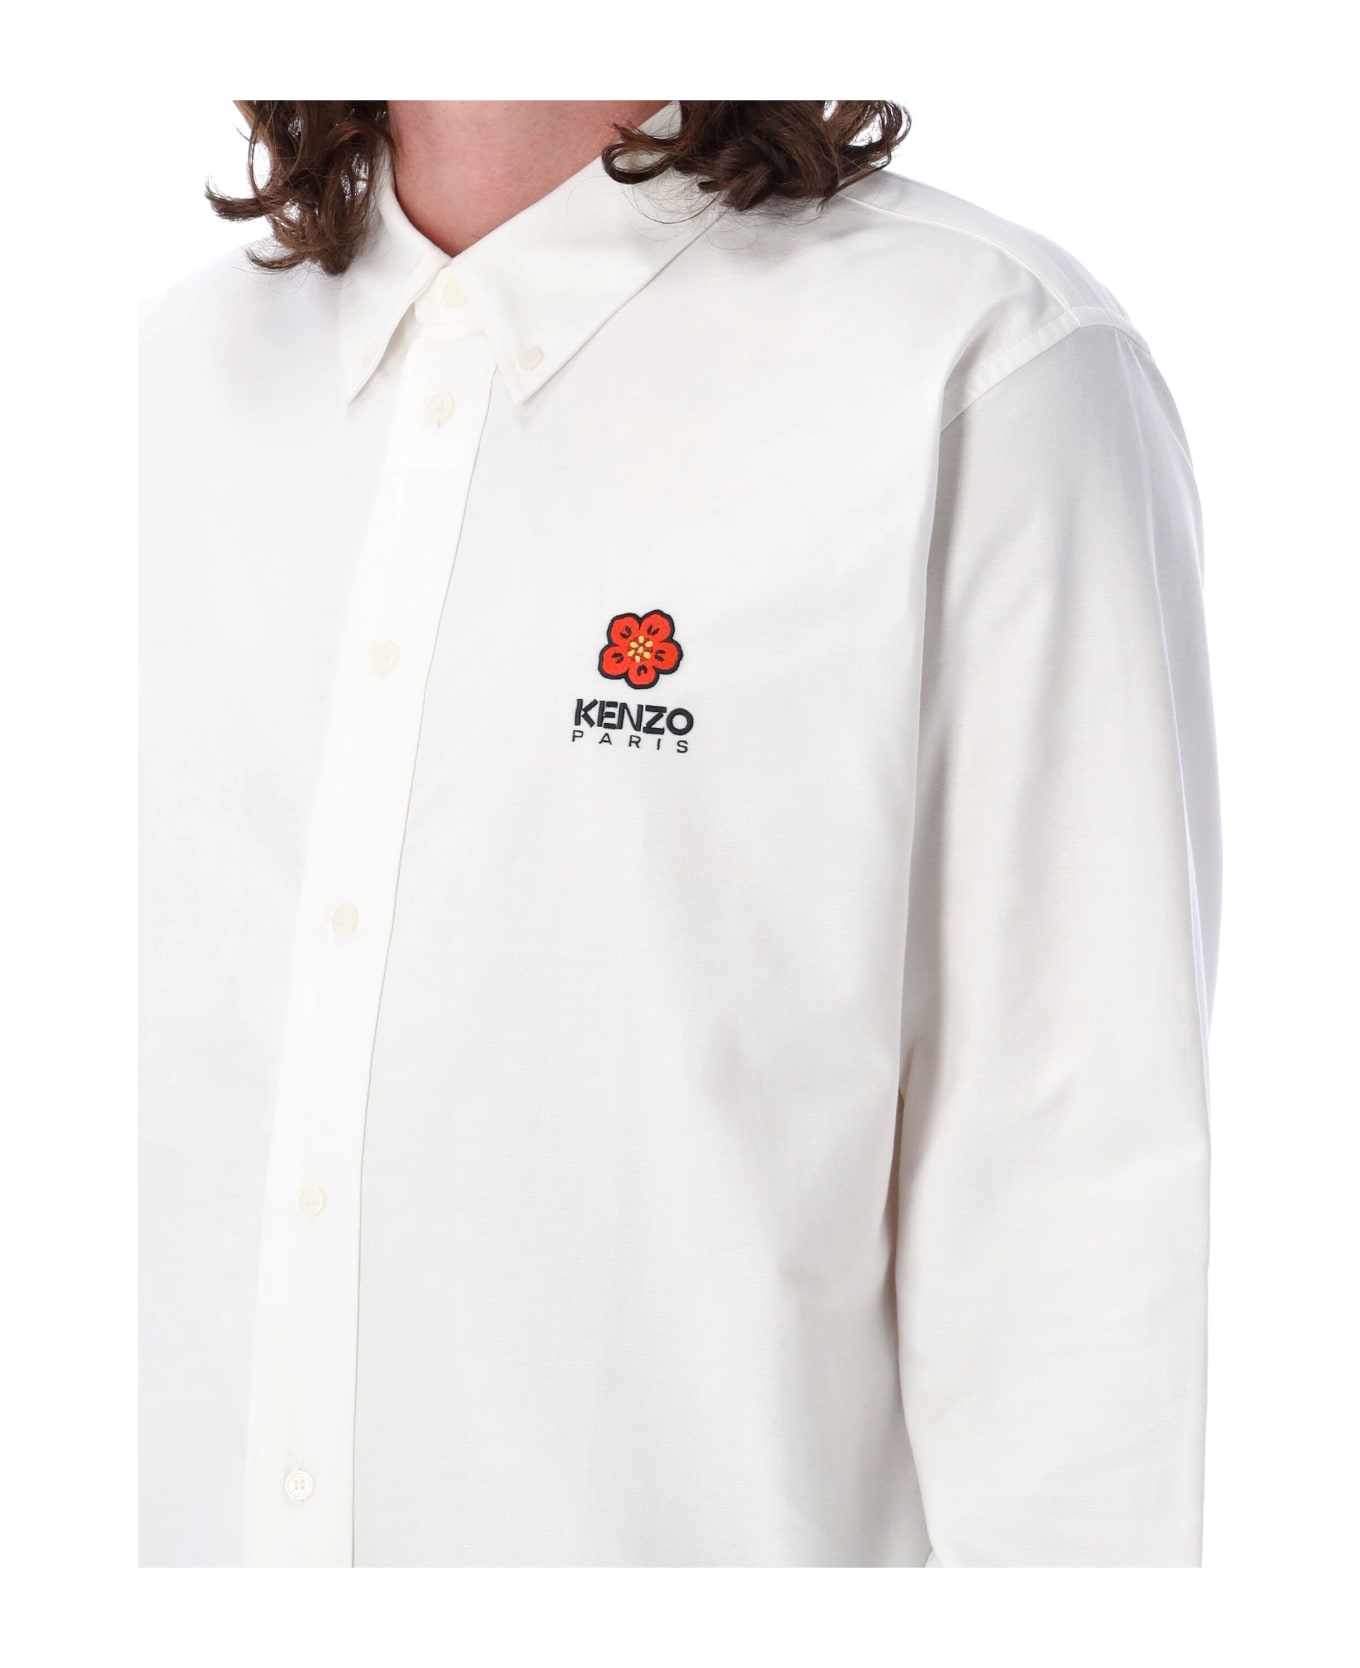 Kenzo Boke Flower Shirt - WHITE